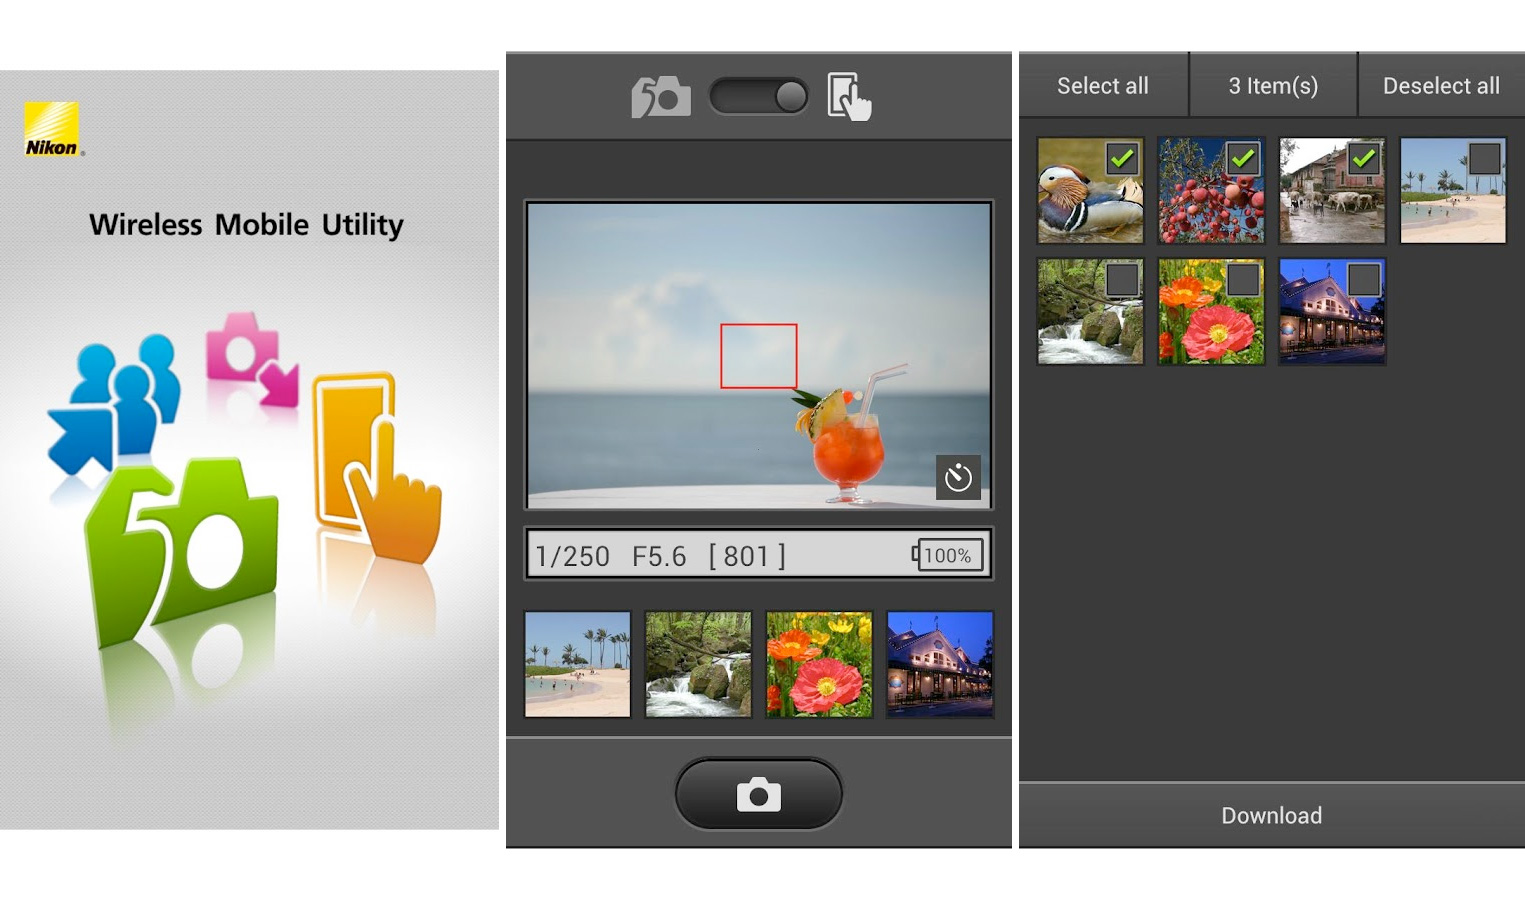 nikon wireless mobile utility app for l380